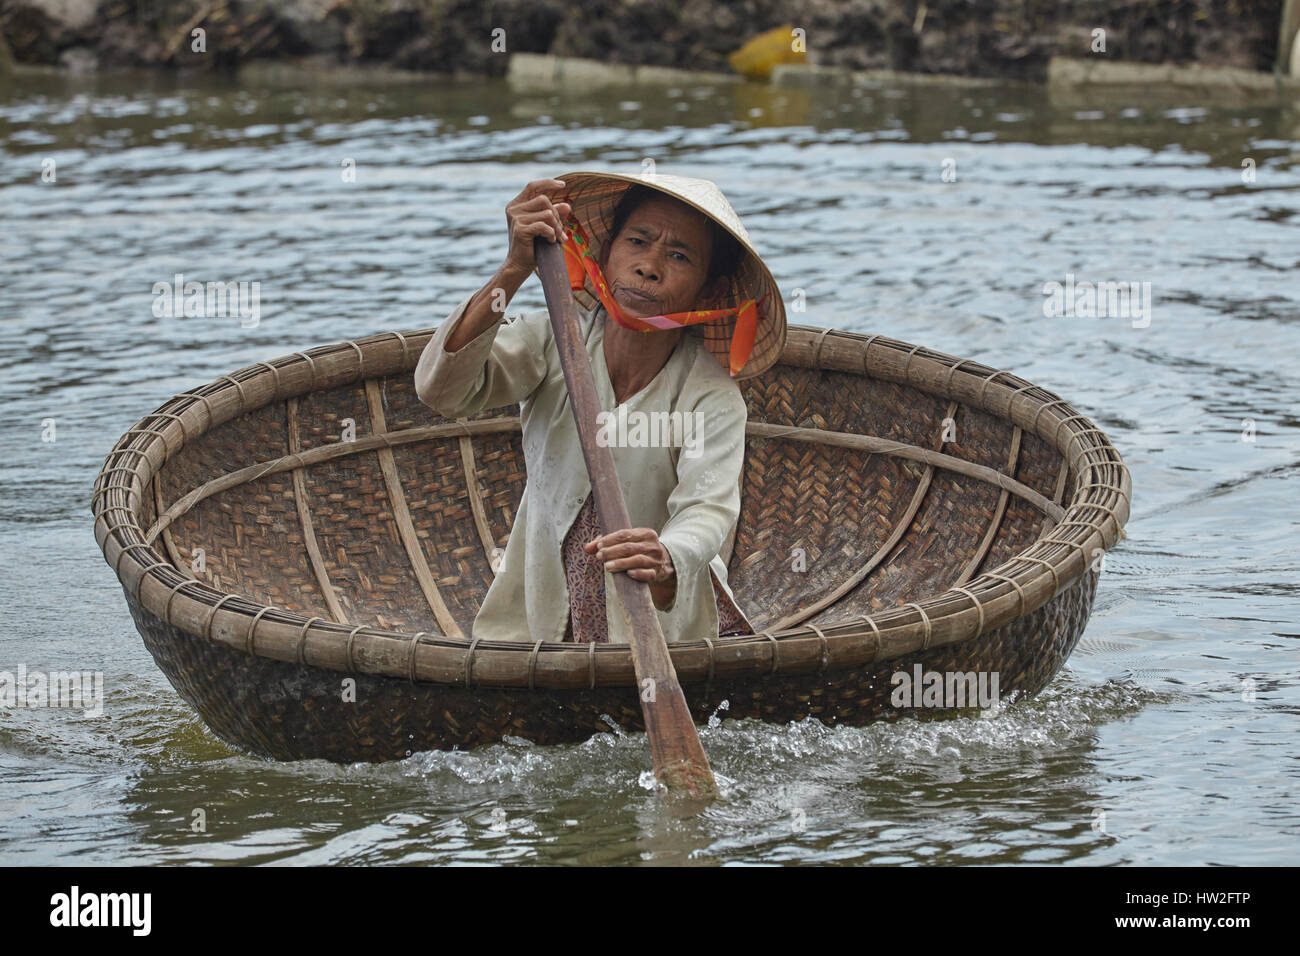 Elderly woman in basket boat, Cam Kim Island, Hoi An, Vietnam Stock Photo